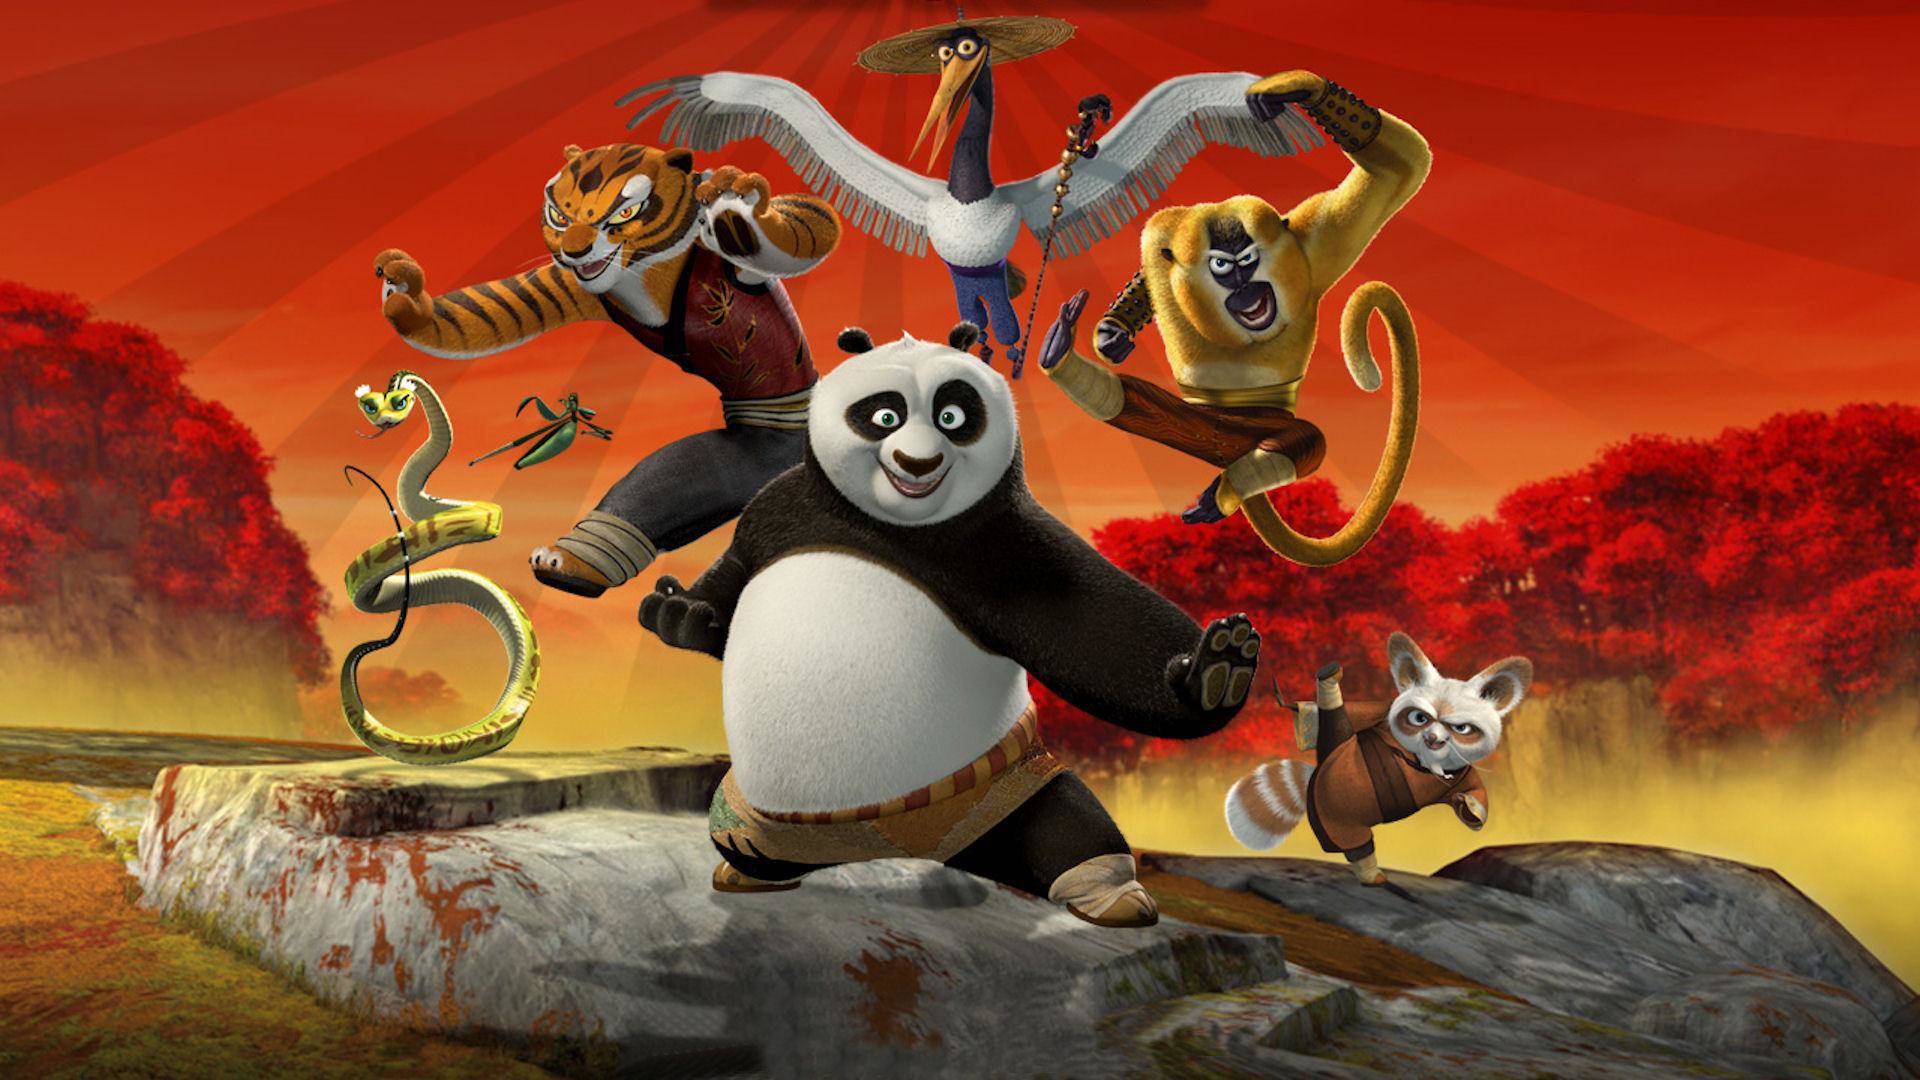 Kung Fu Panda 2 Wallpapers - Top Free Kung Fu Panda 2 Backgrounds